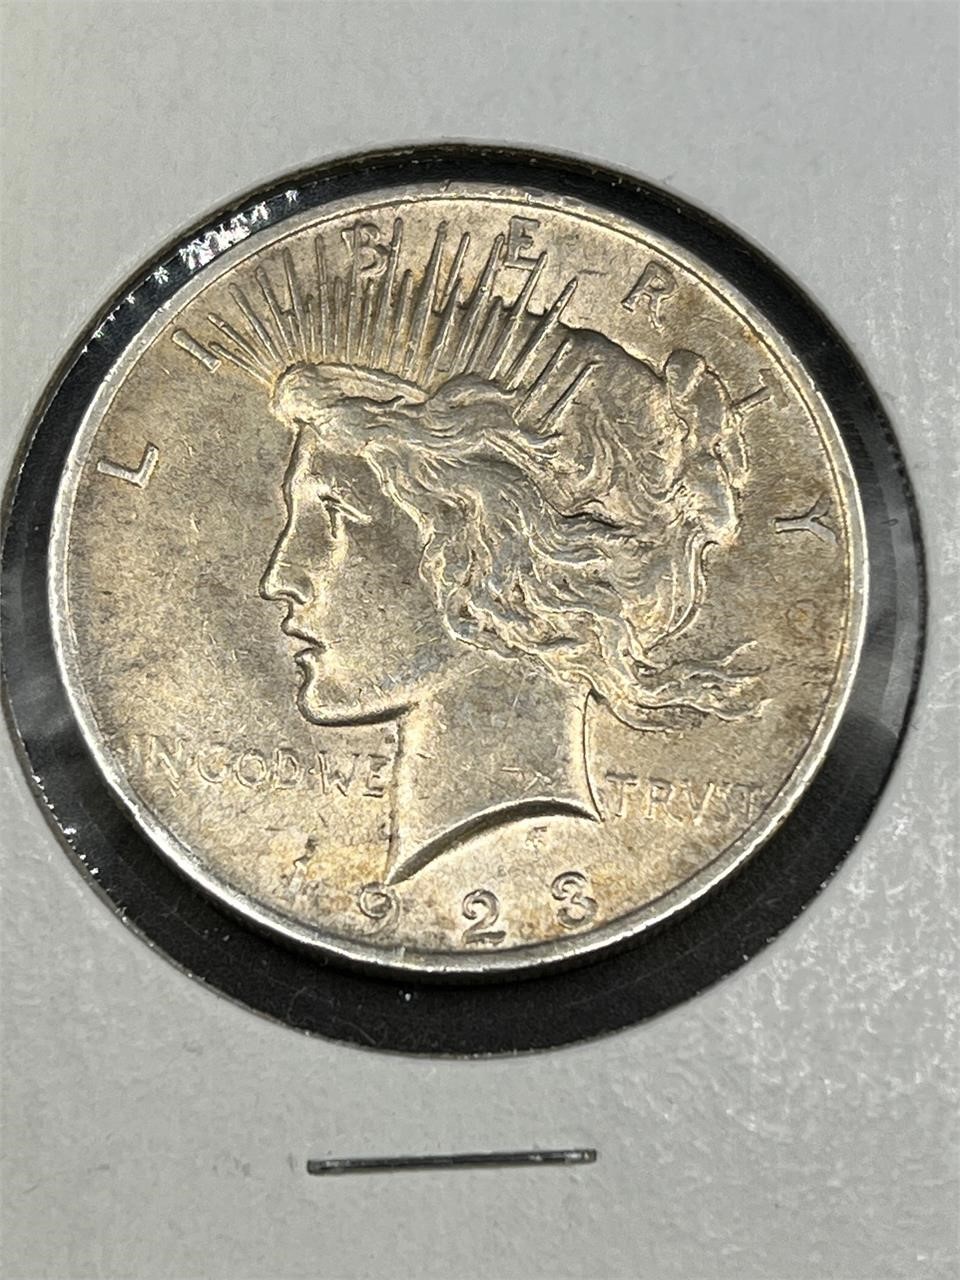 2023 American Silver Eagle coin